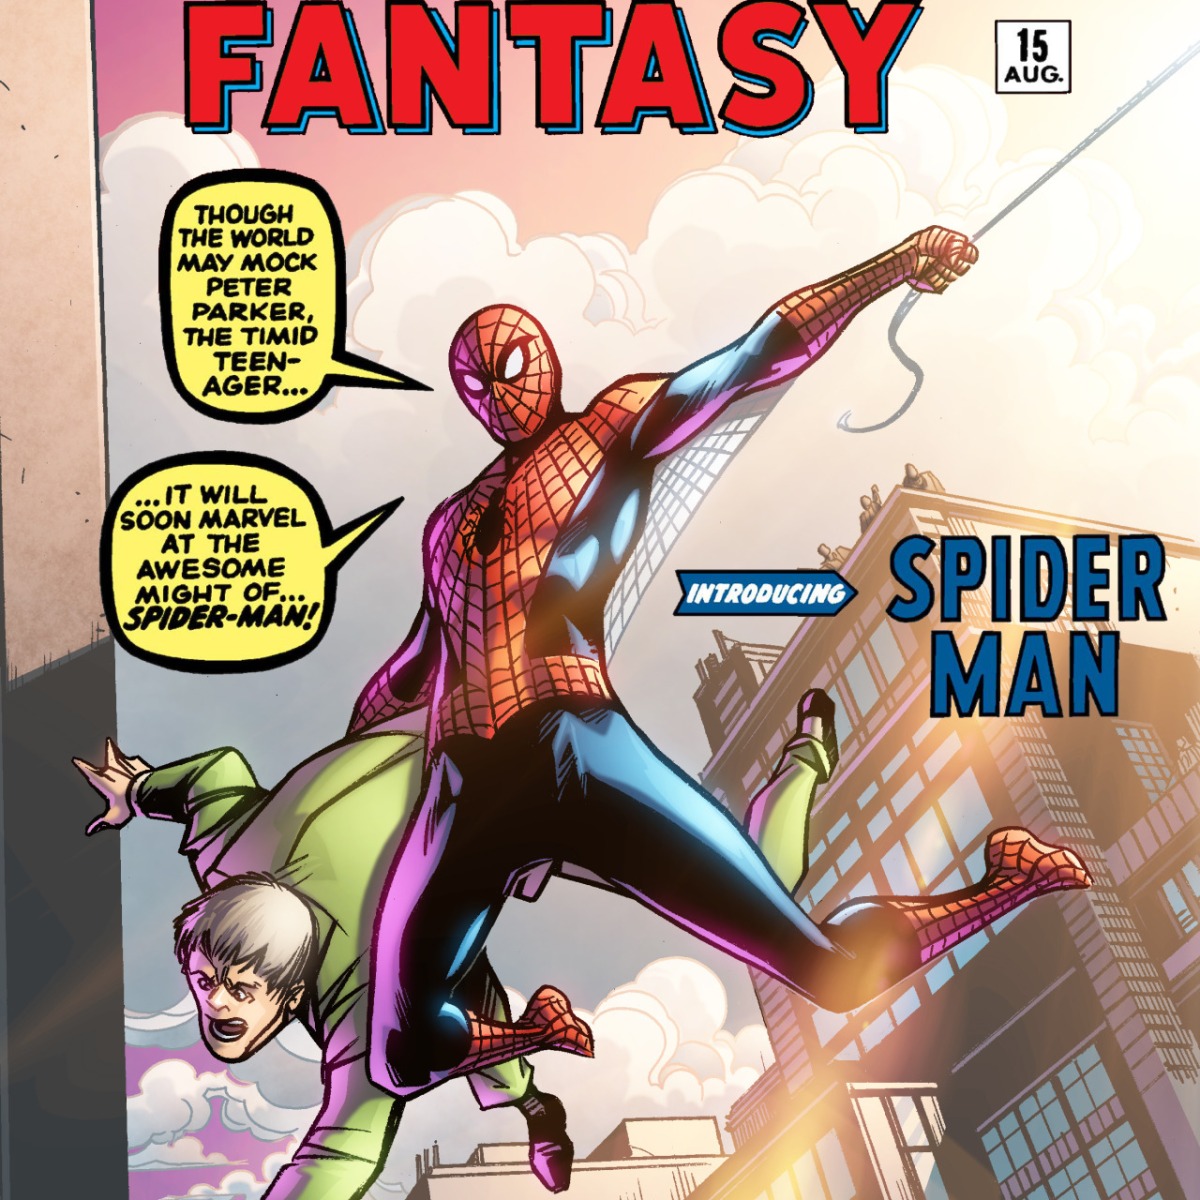 SpiderMan anniversary – Comic cover remake